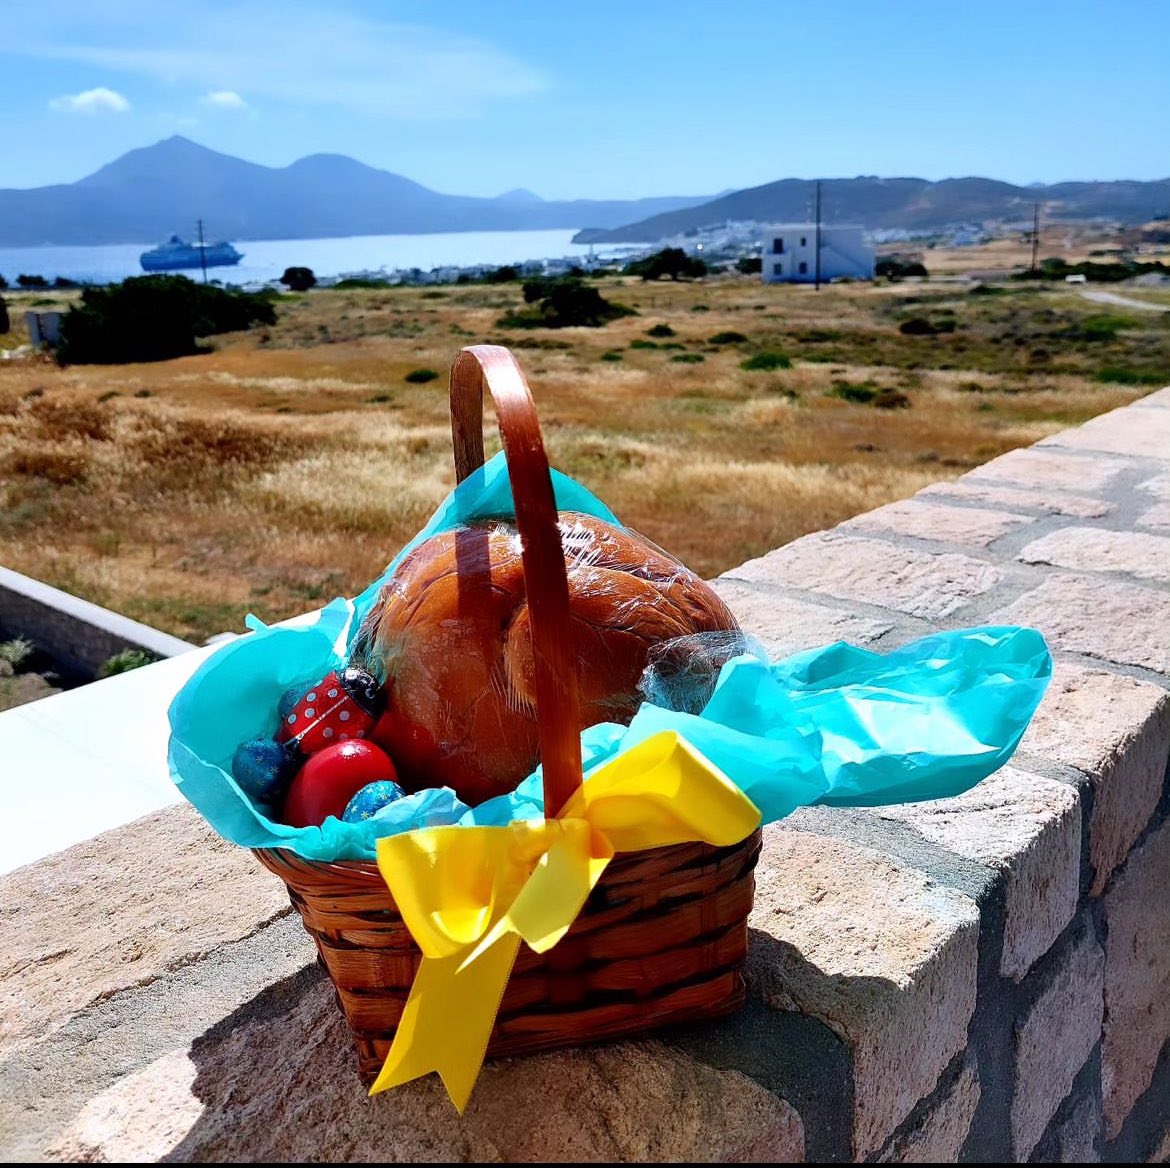 Easter gift for our guests!

#mysuite #mysuitemilos #myview
#milos #milosisland #cyclades #milosgreece #greece #greekislands #greecevacation #cycladicstyle
#interiordesign #summertime #bestvacations #aegeansea #roomwithaview #honeymoon